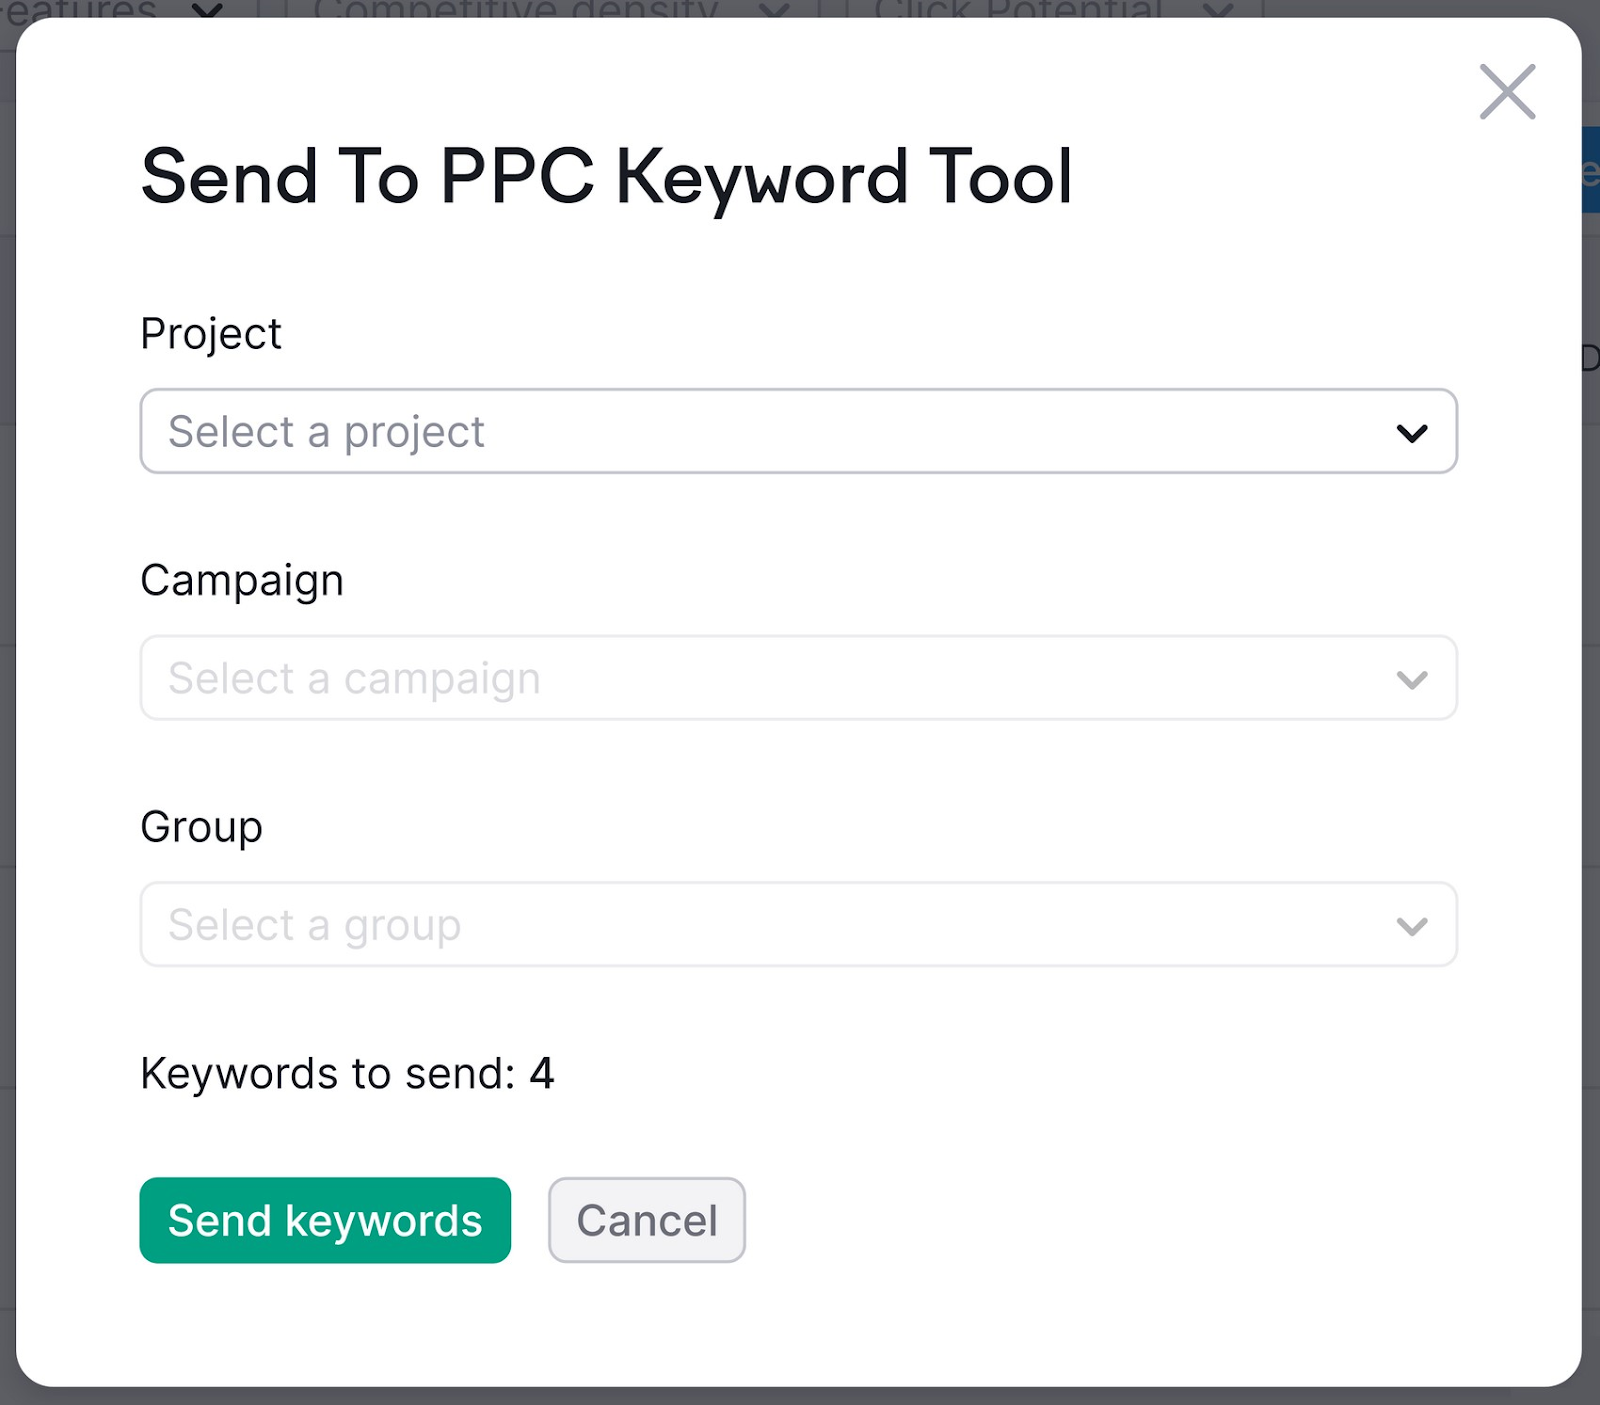 “Send To PPC Keyword Tool” dialogue window